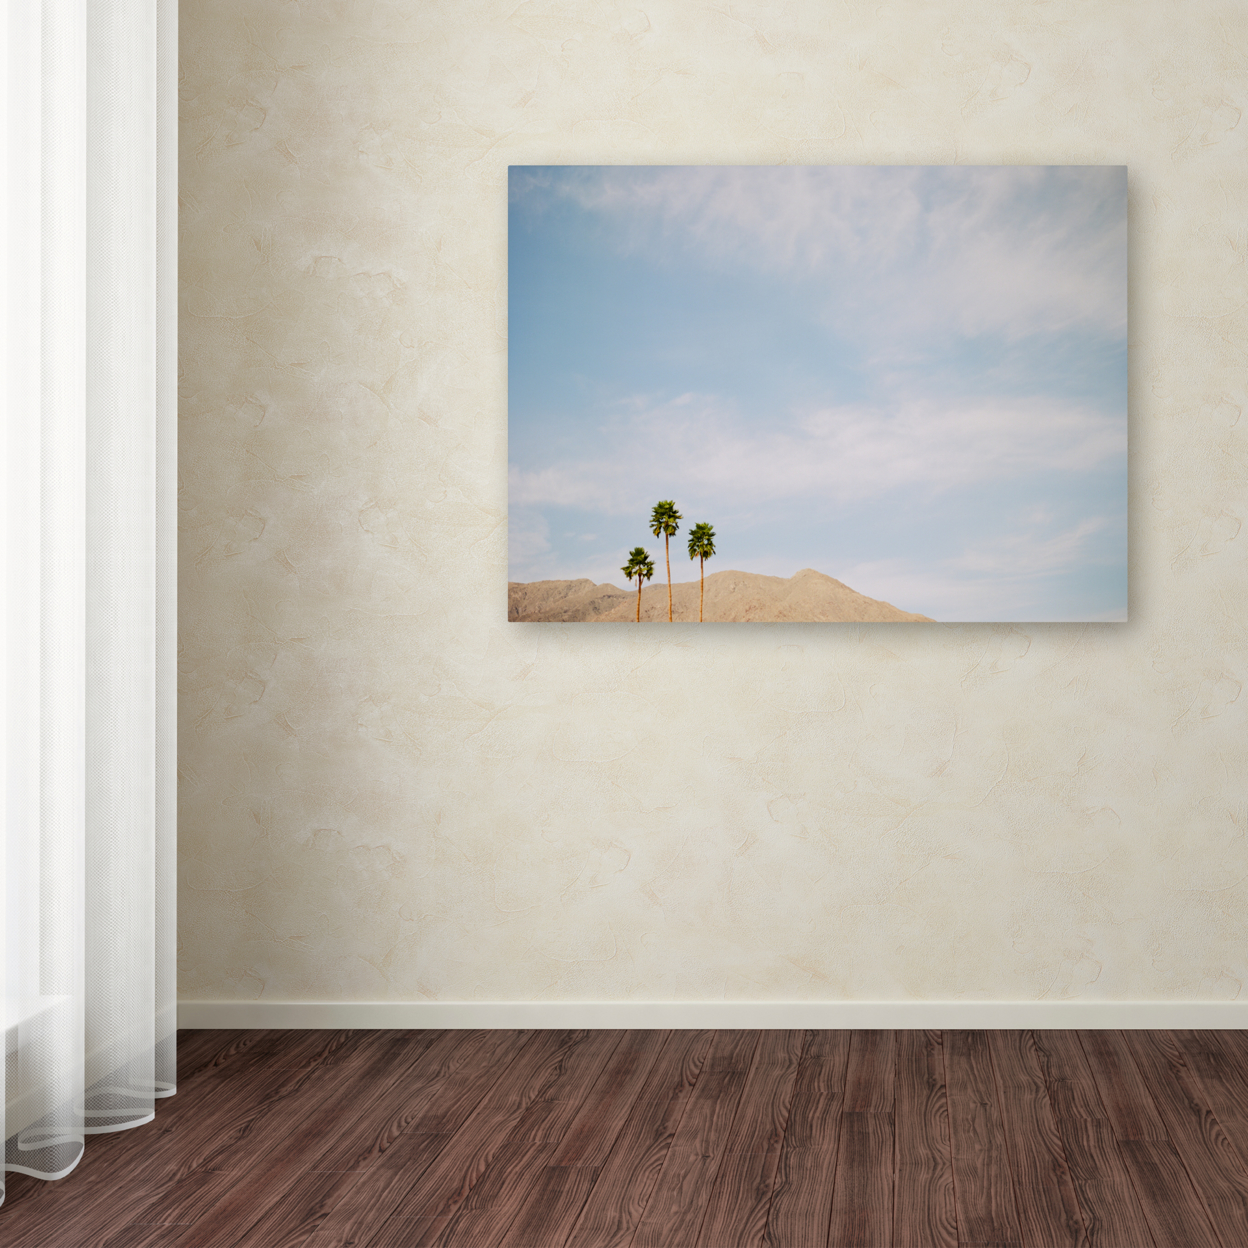 Ariane Moshayedi 'Three Palms' Canvas Wall Art 35 X 47 Inches